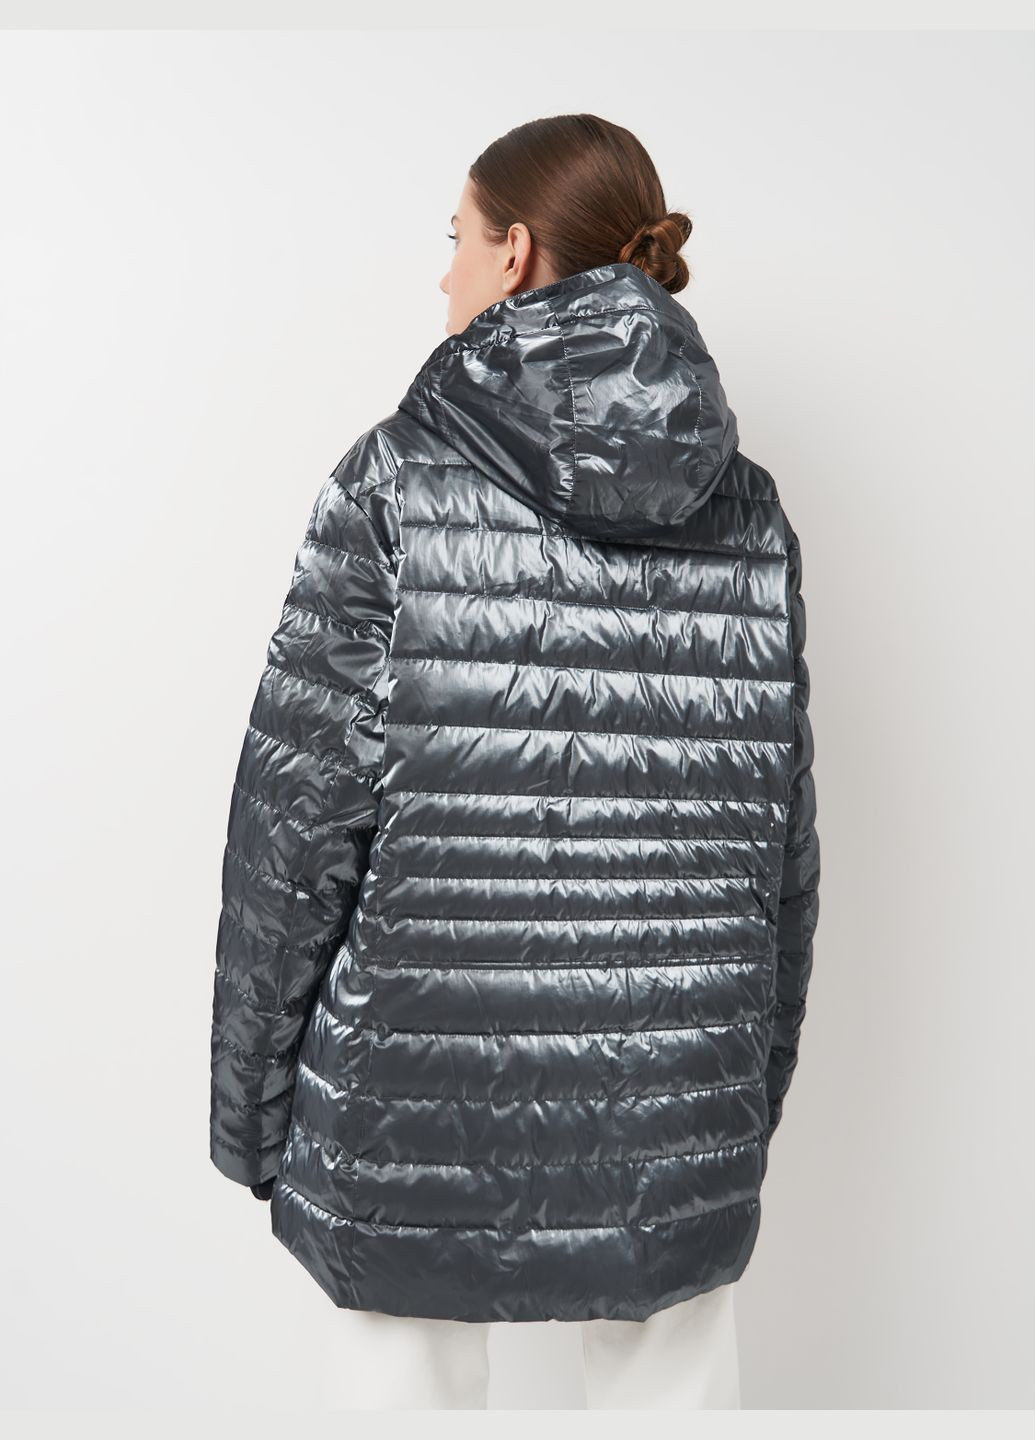 Серебряная зимняя куртка лыжная C&A